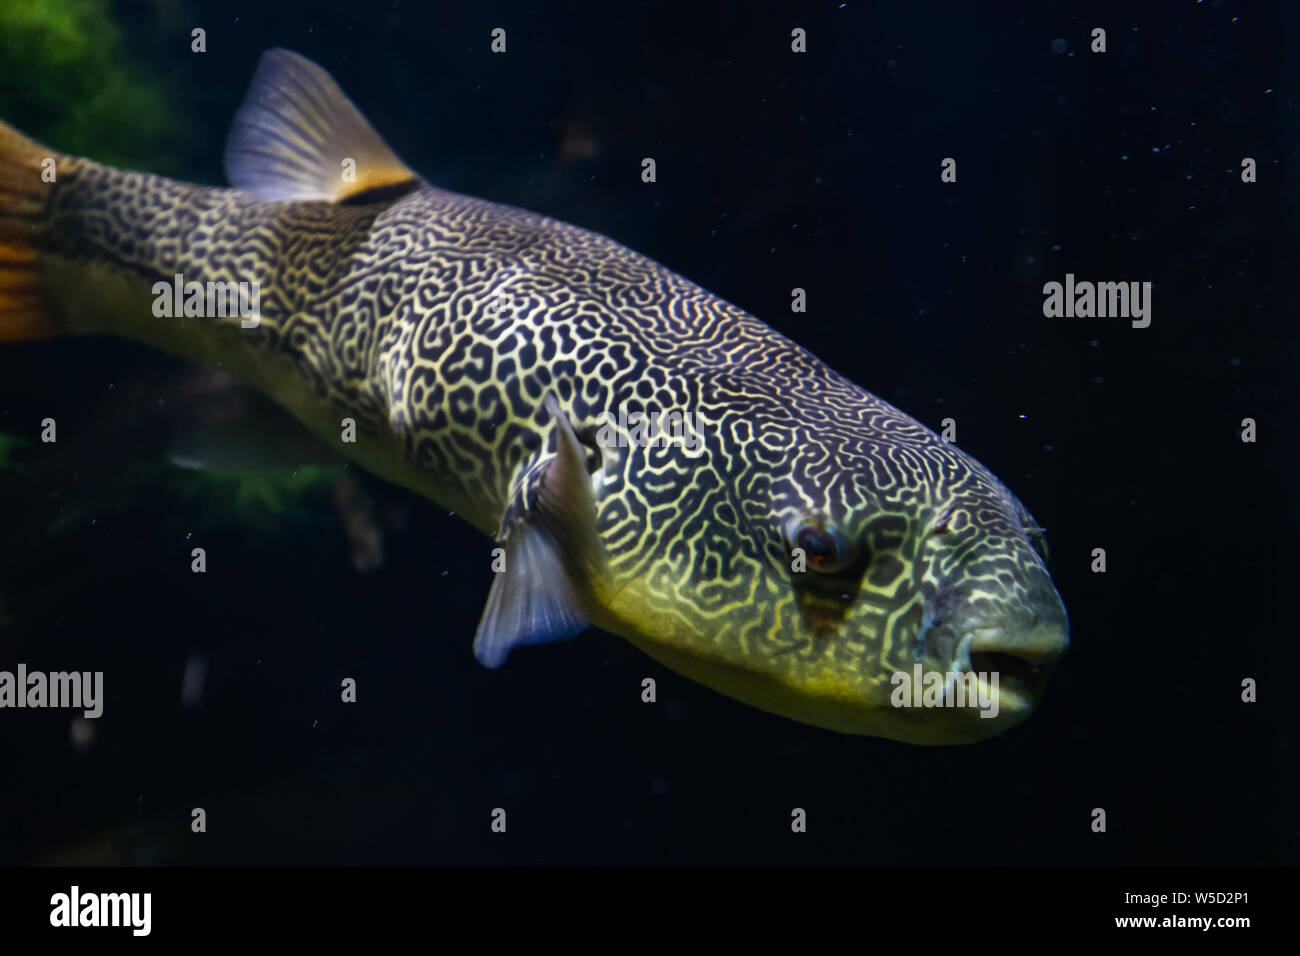 The Salt Water Puffer fish close-up underwater Stock Photo - Alamy